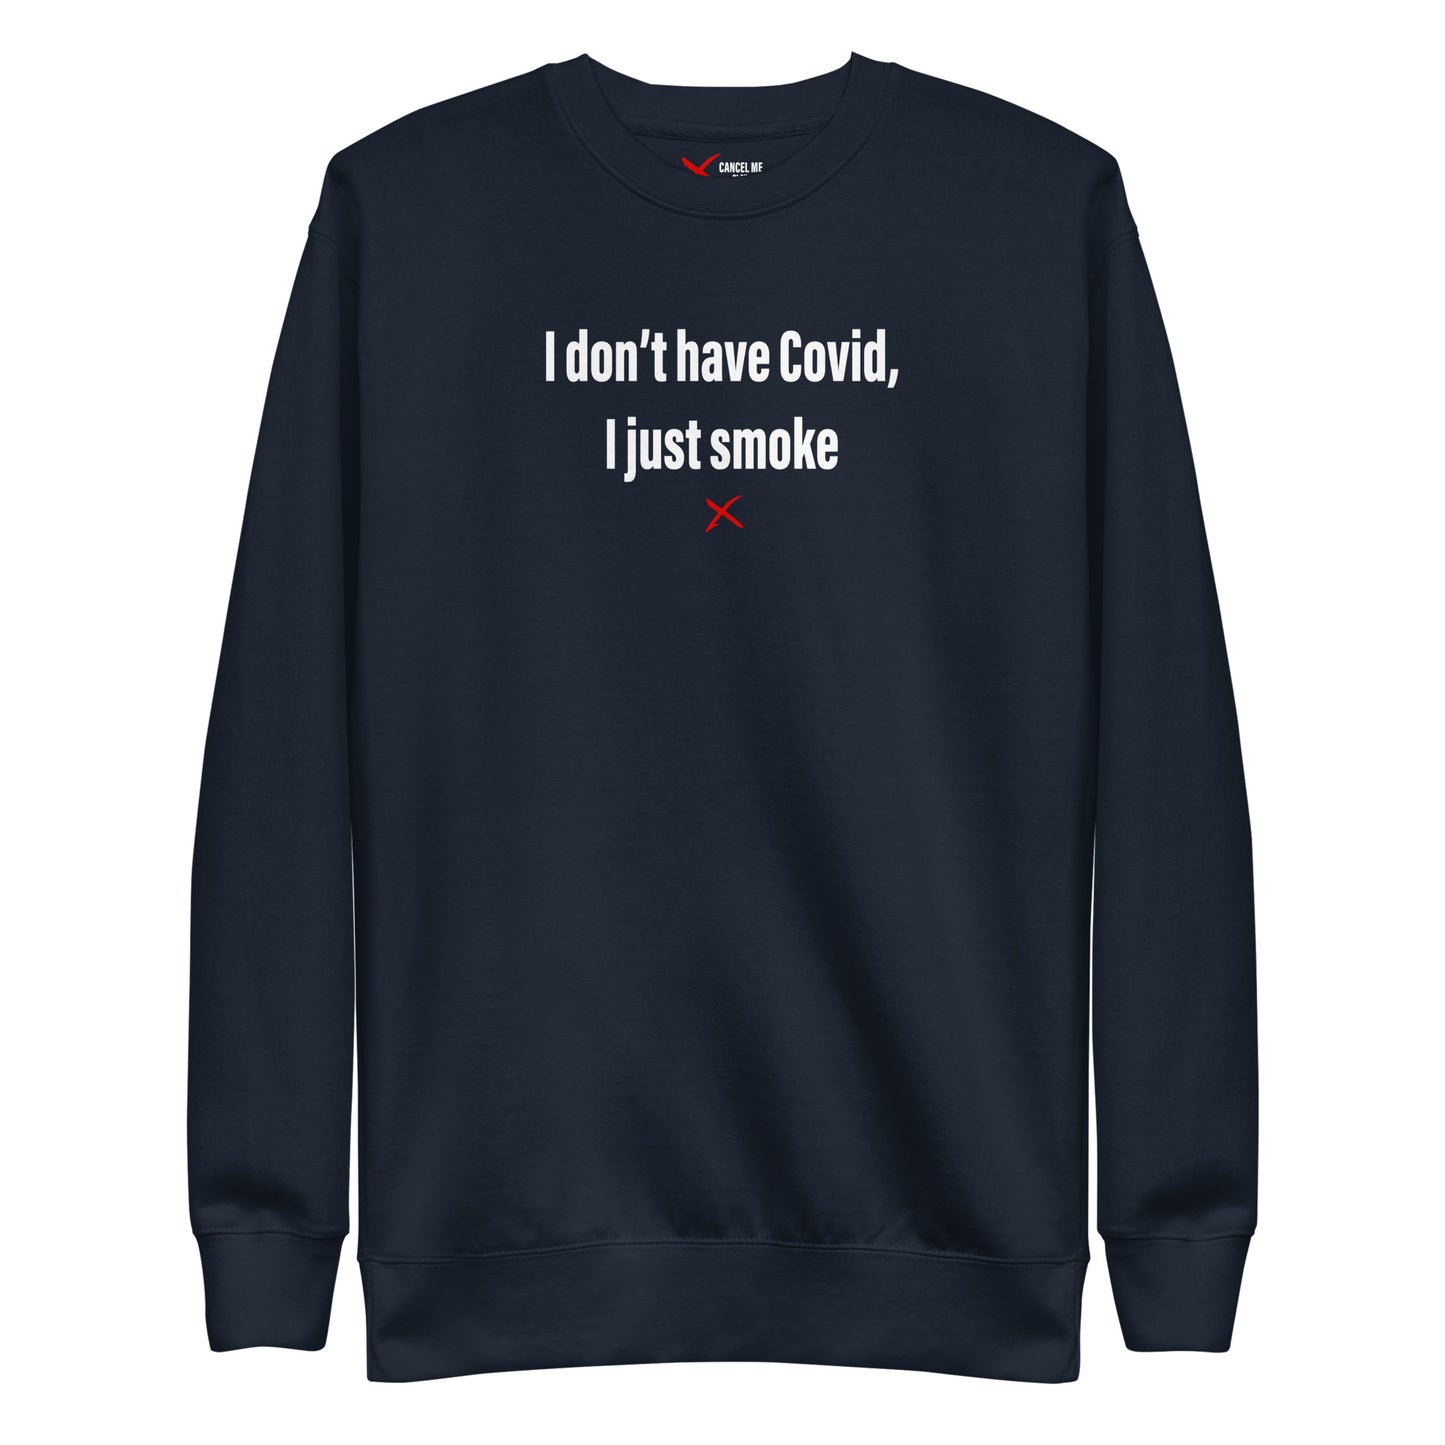 I don't have Covid, I just smoke - Sweatshirt